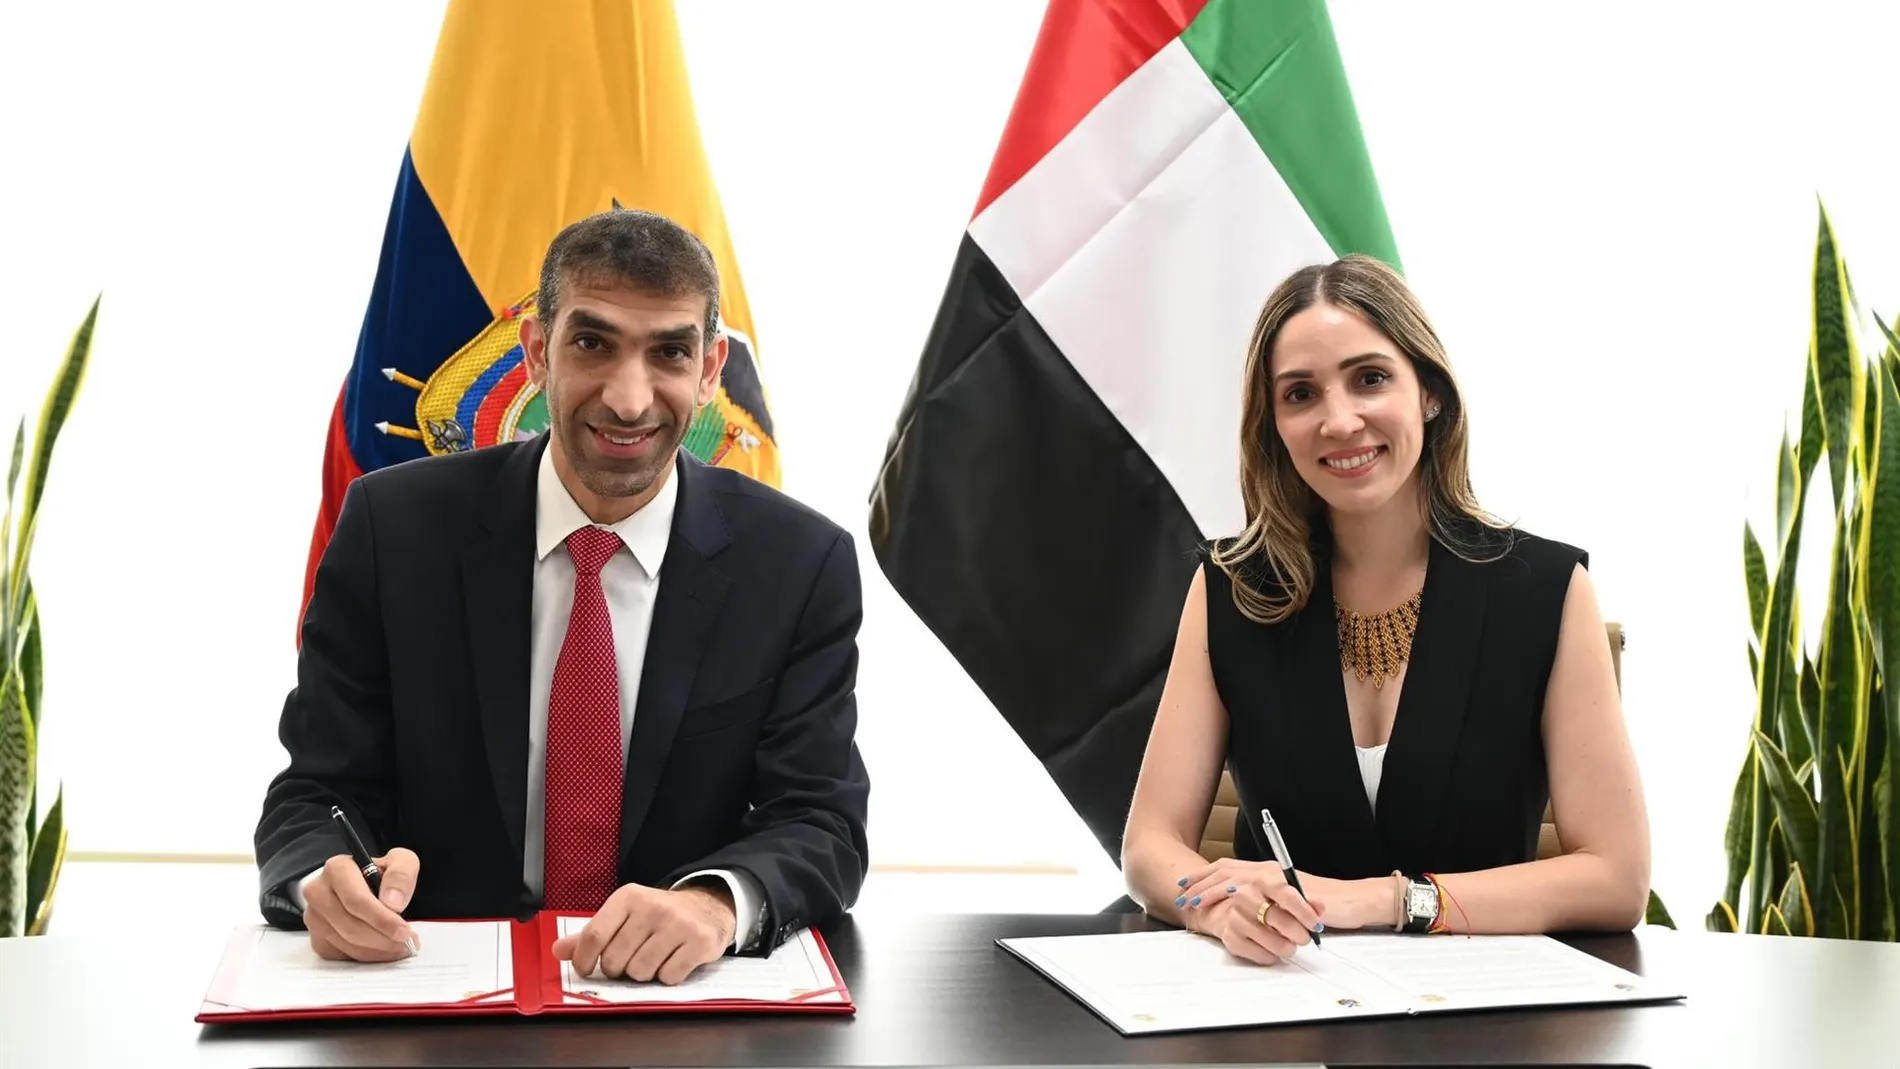 Economía.- Ecuador y Emiratos Árabes Unidos comienzan a negociar un acuerdo comercial